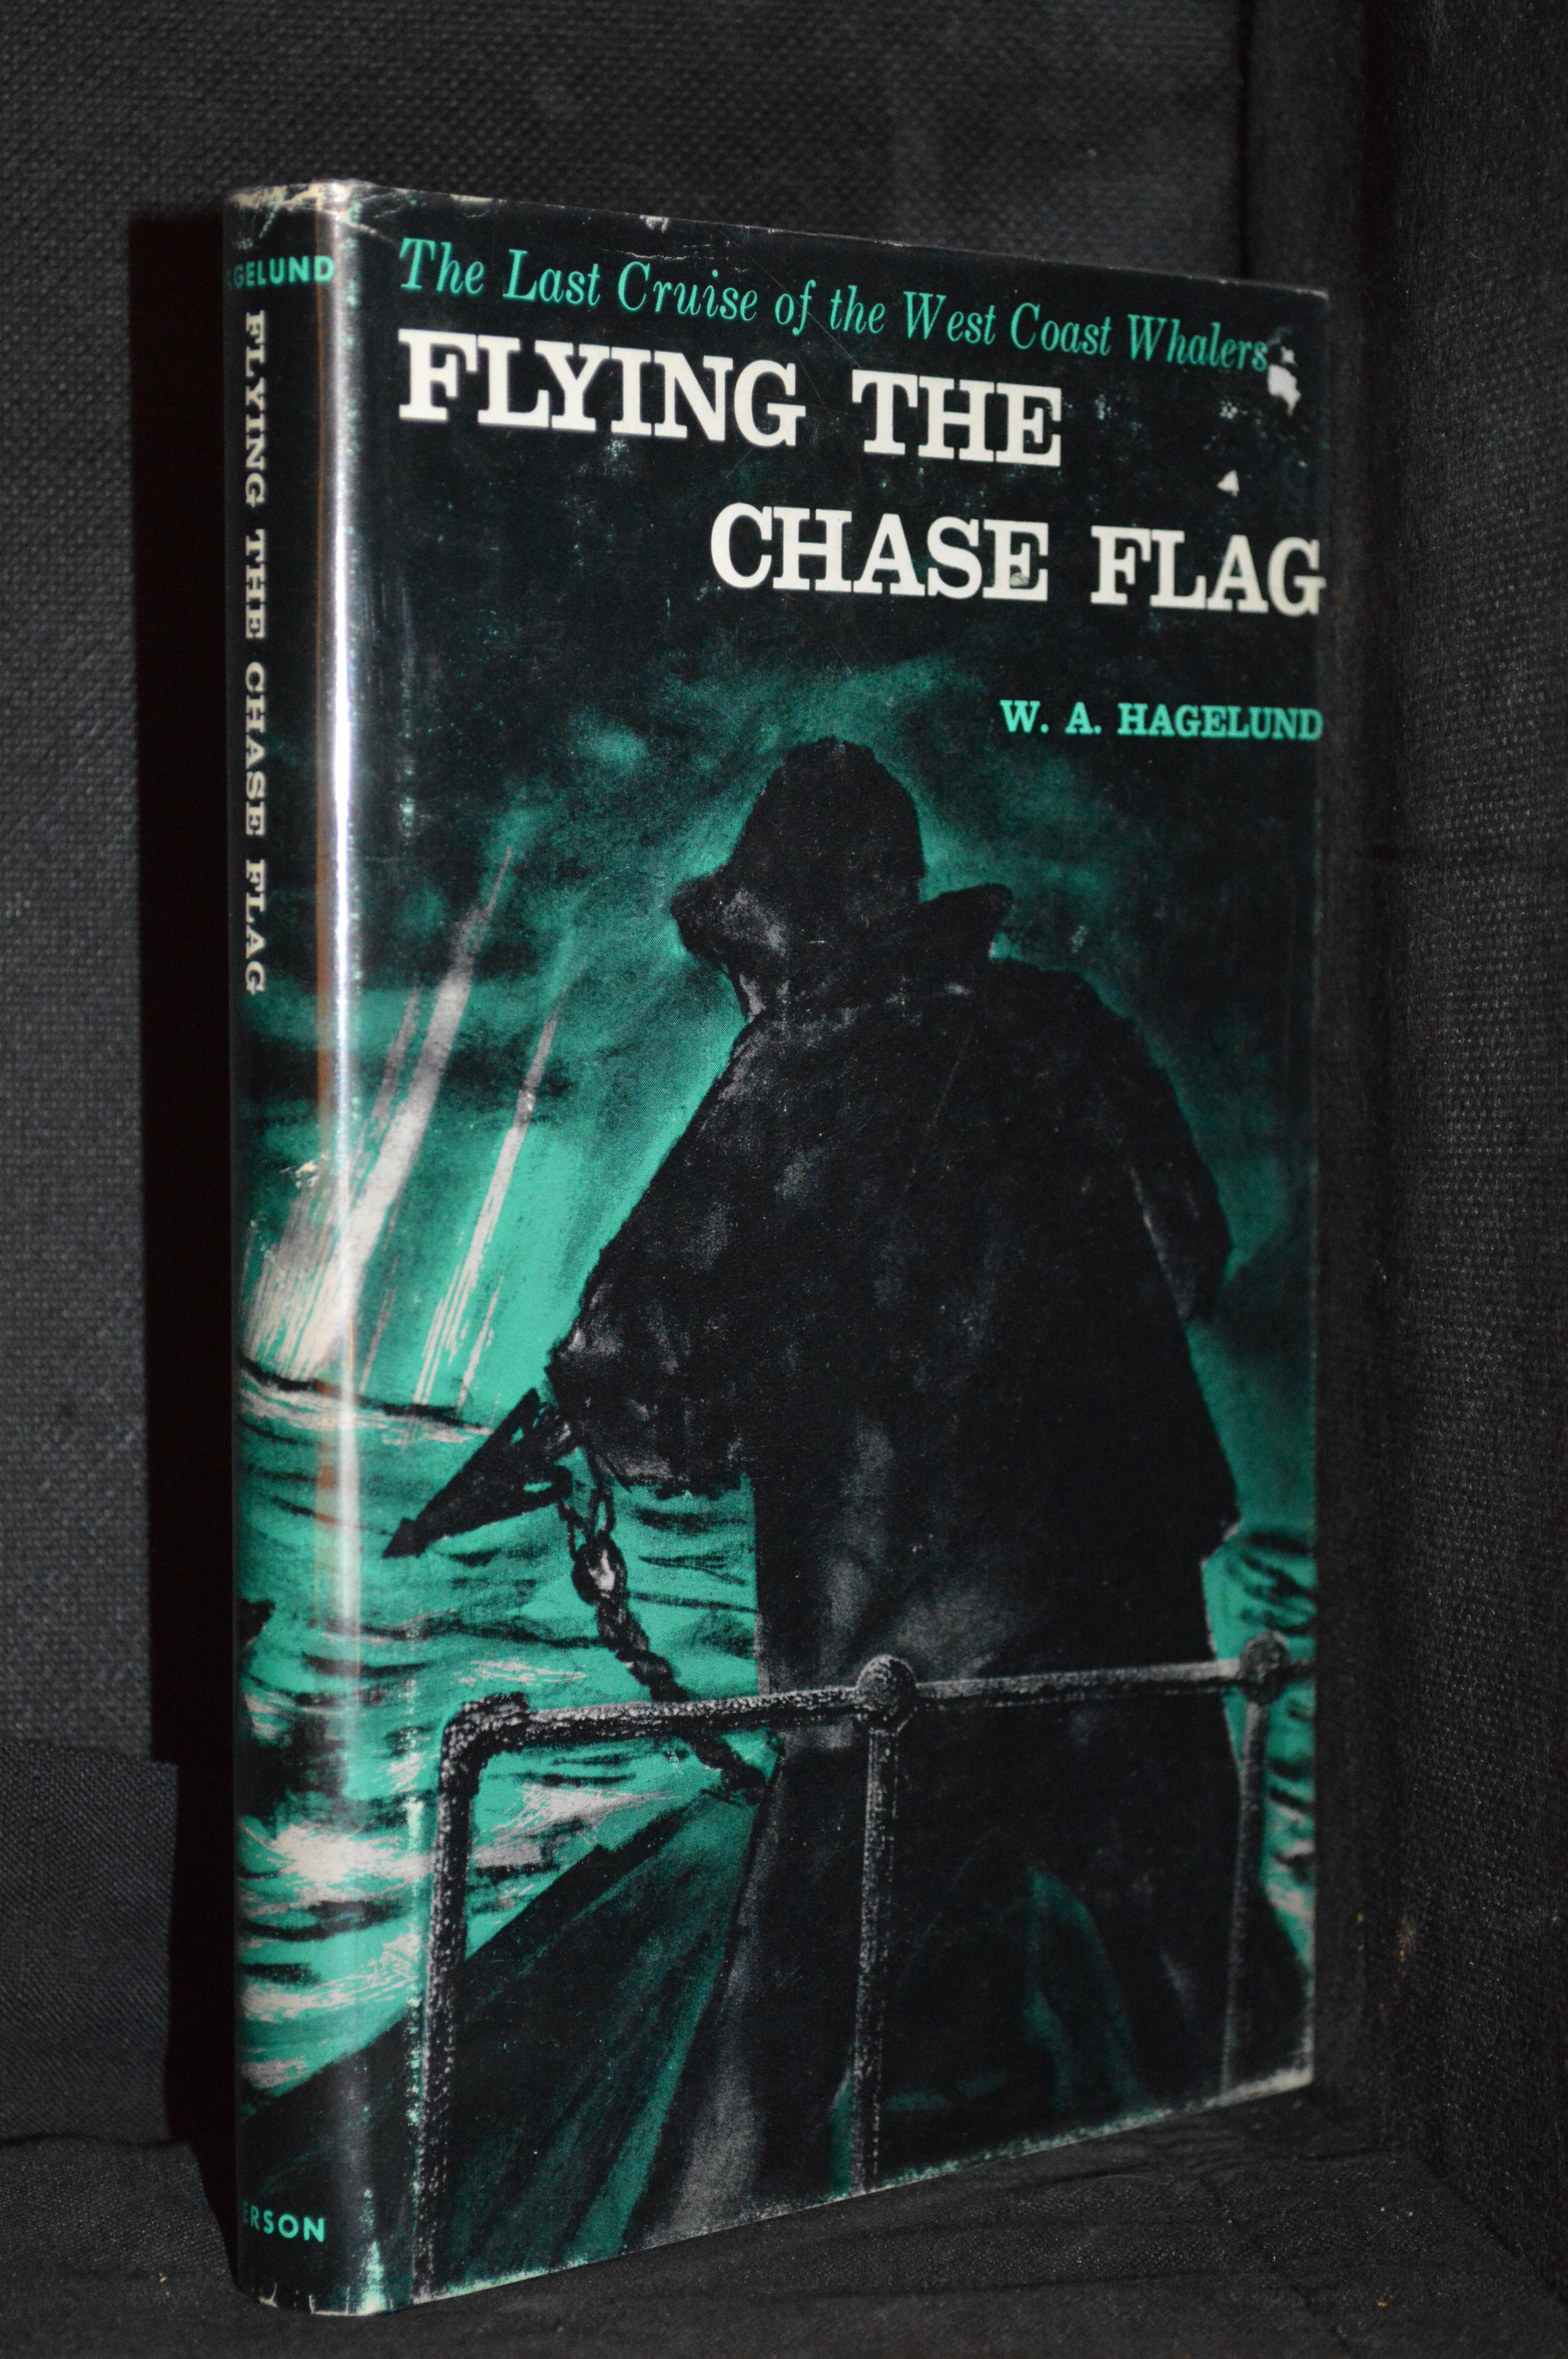 Last Flag Flying: A Novel